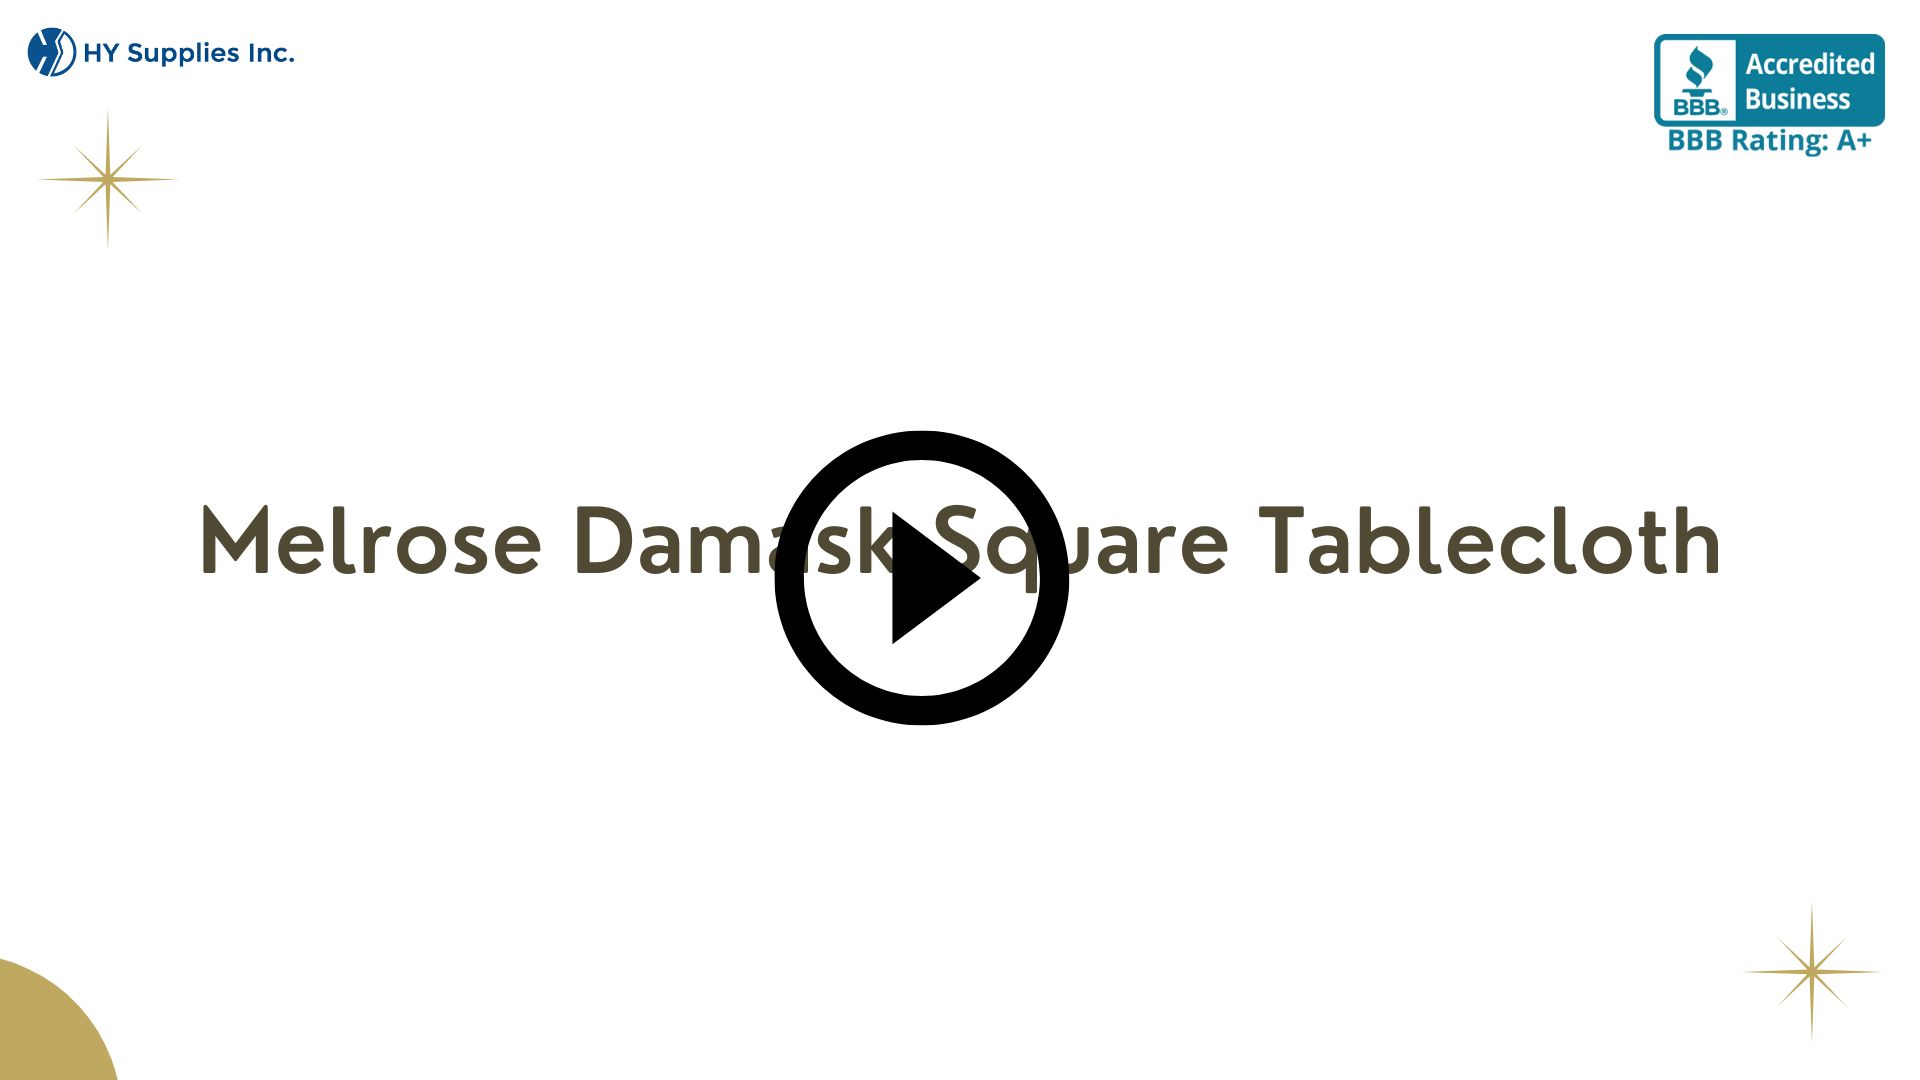 Melrose Damask Square Tablecloth